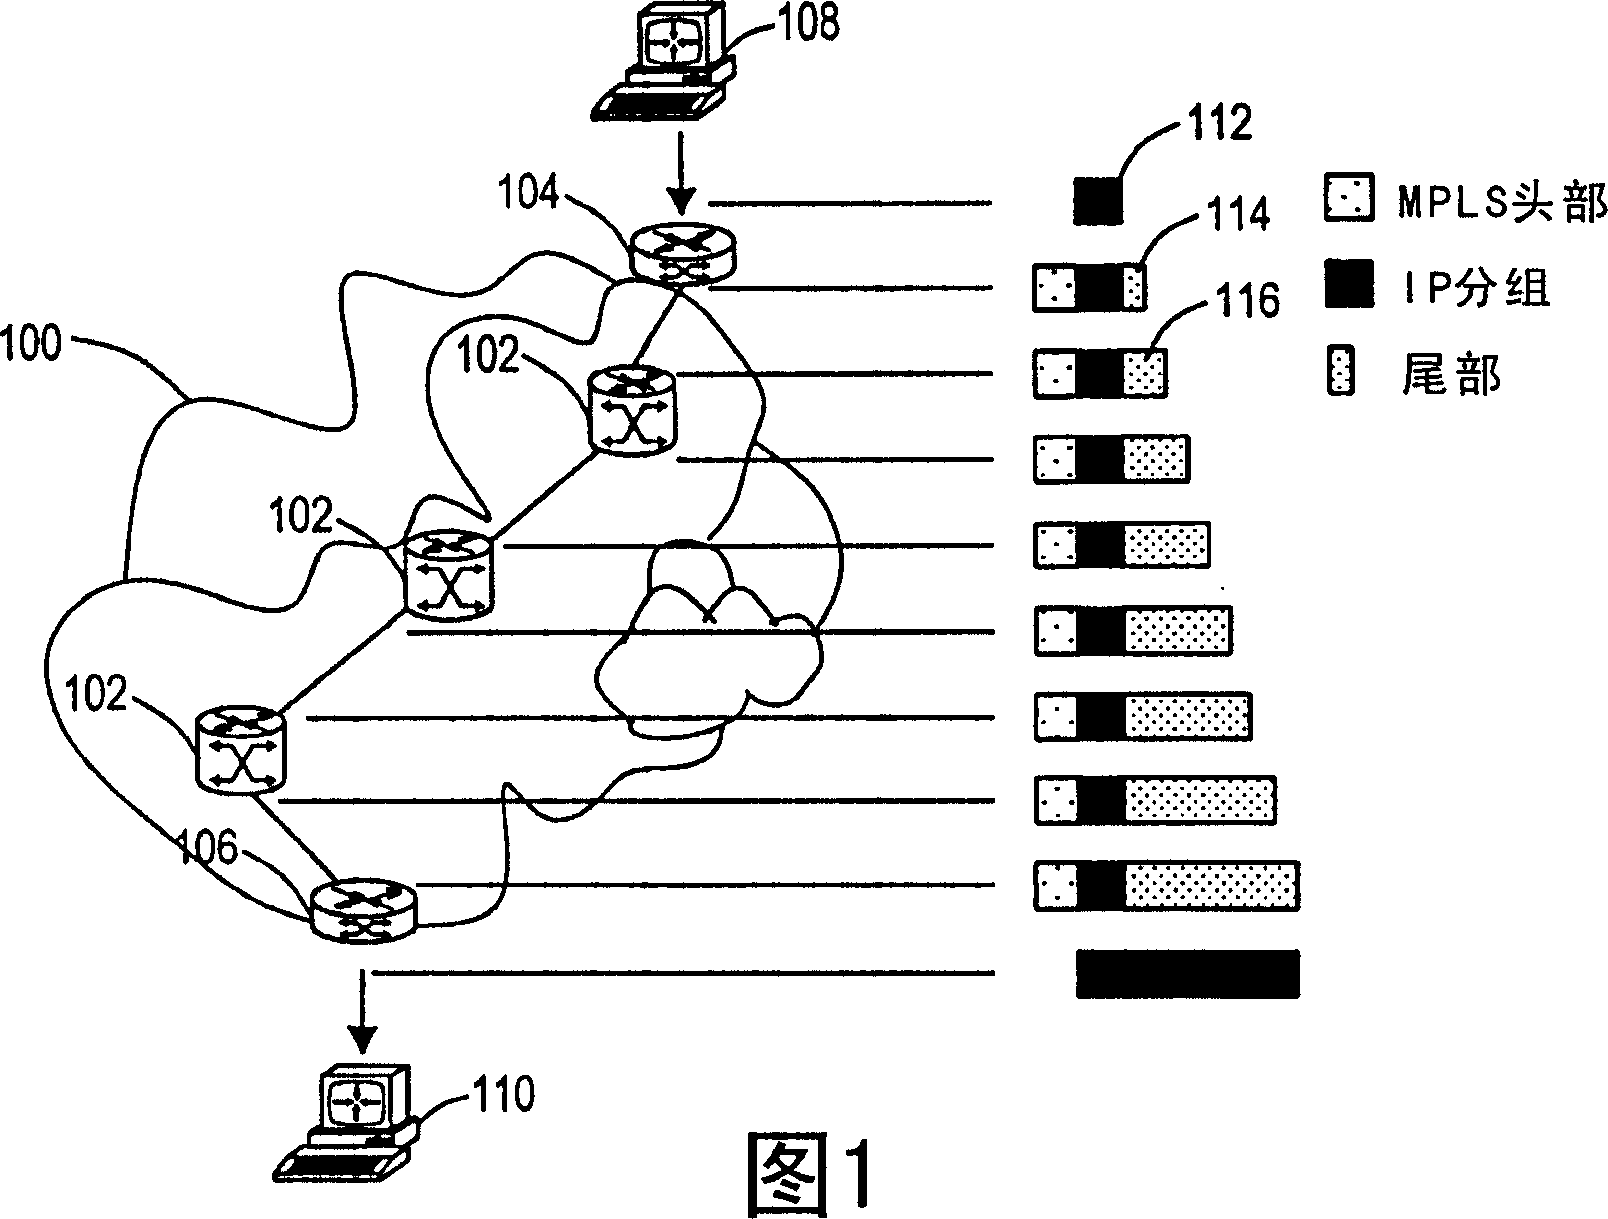 Method of generating a monitoring datagram